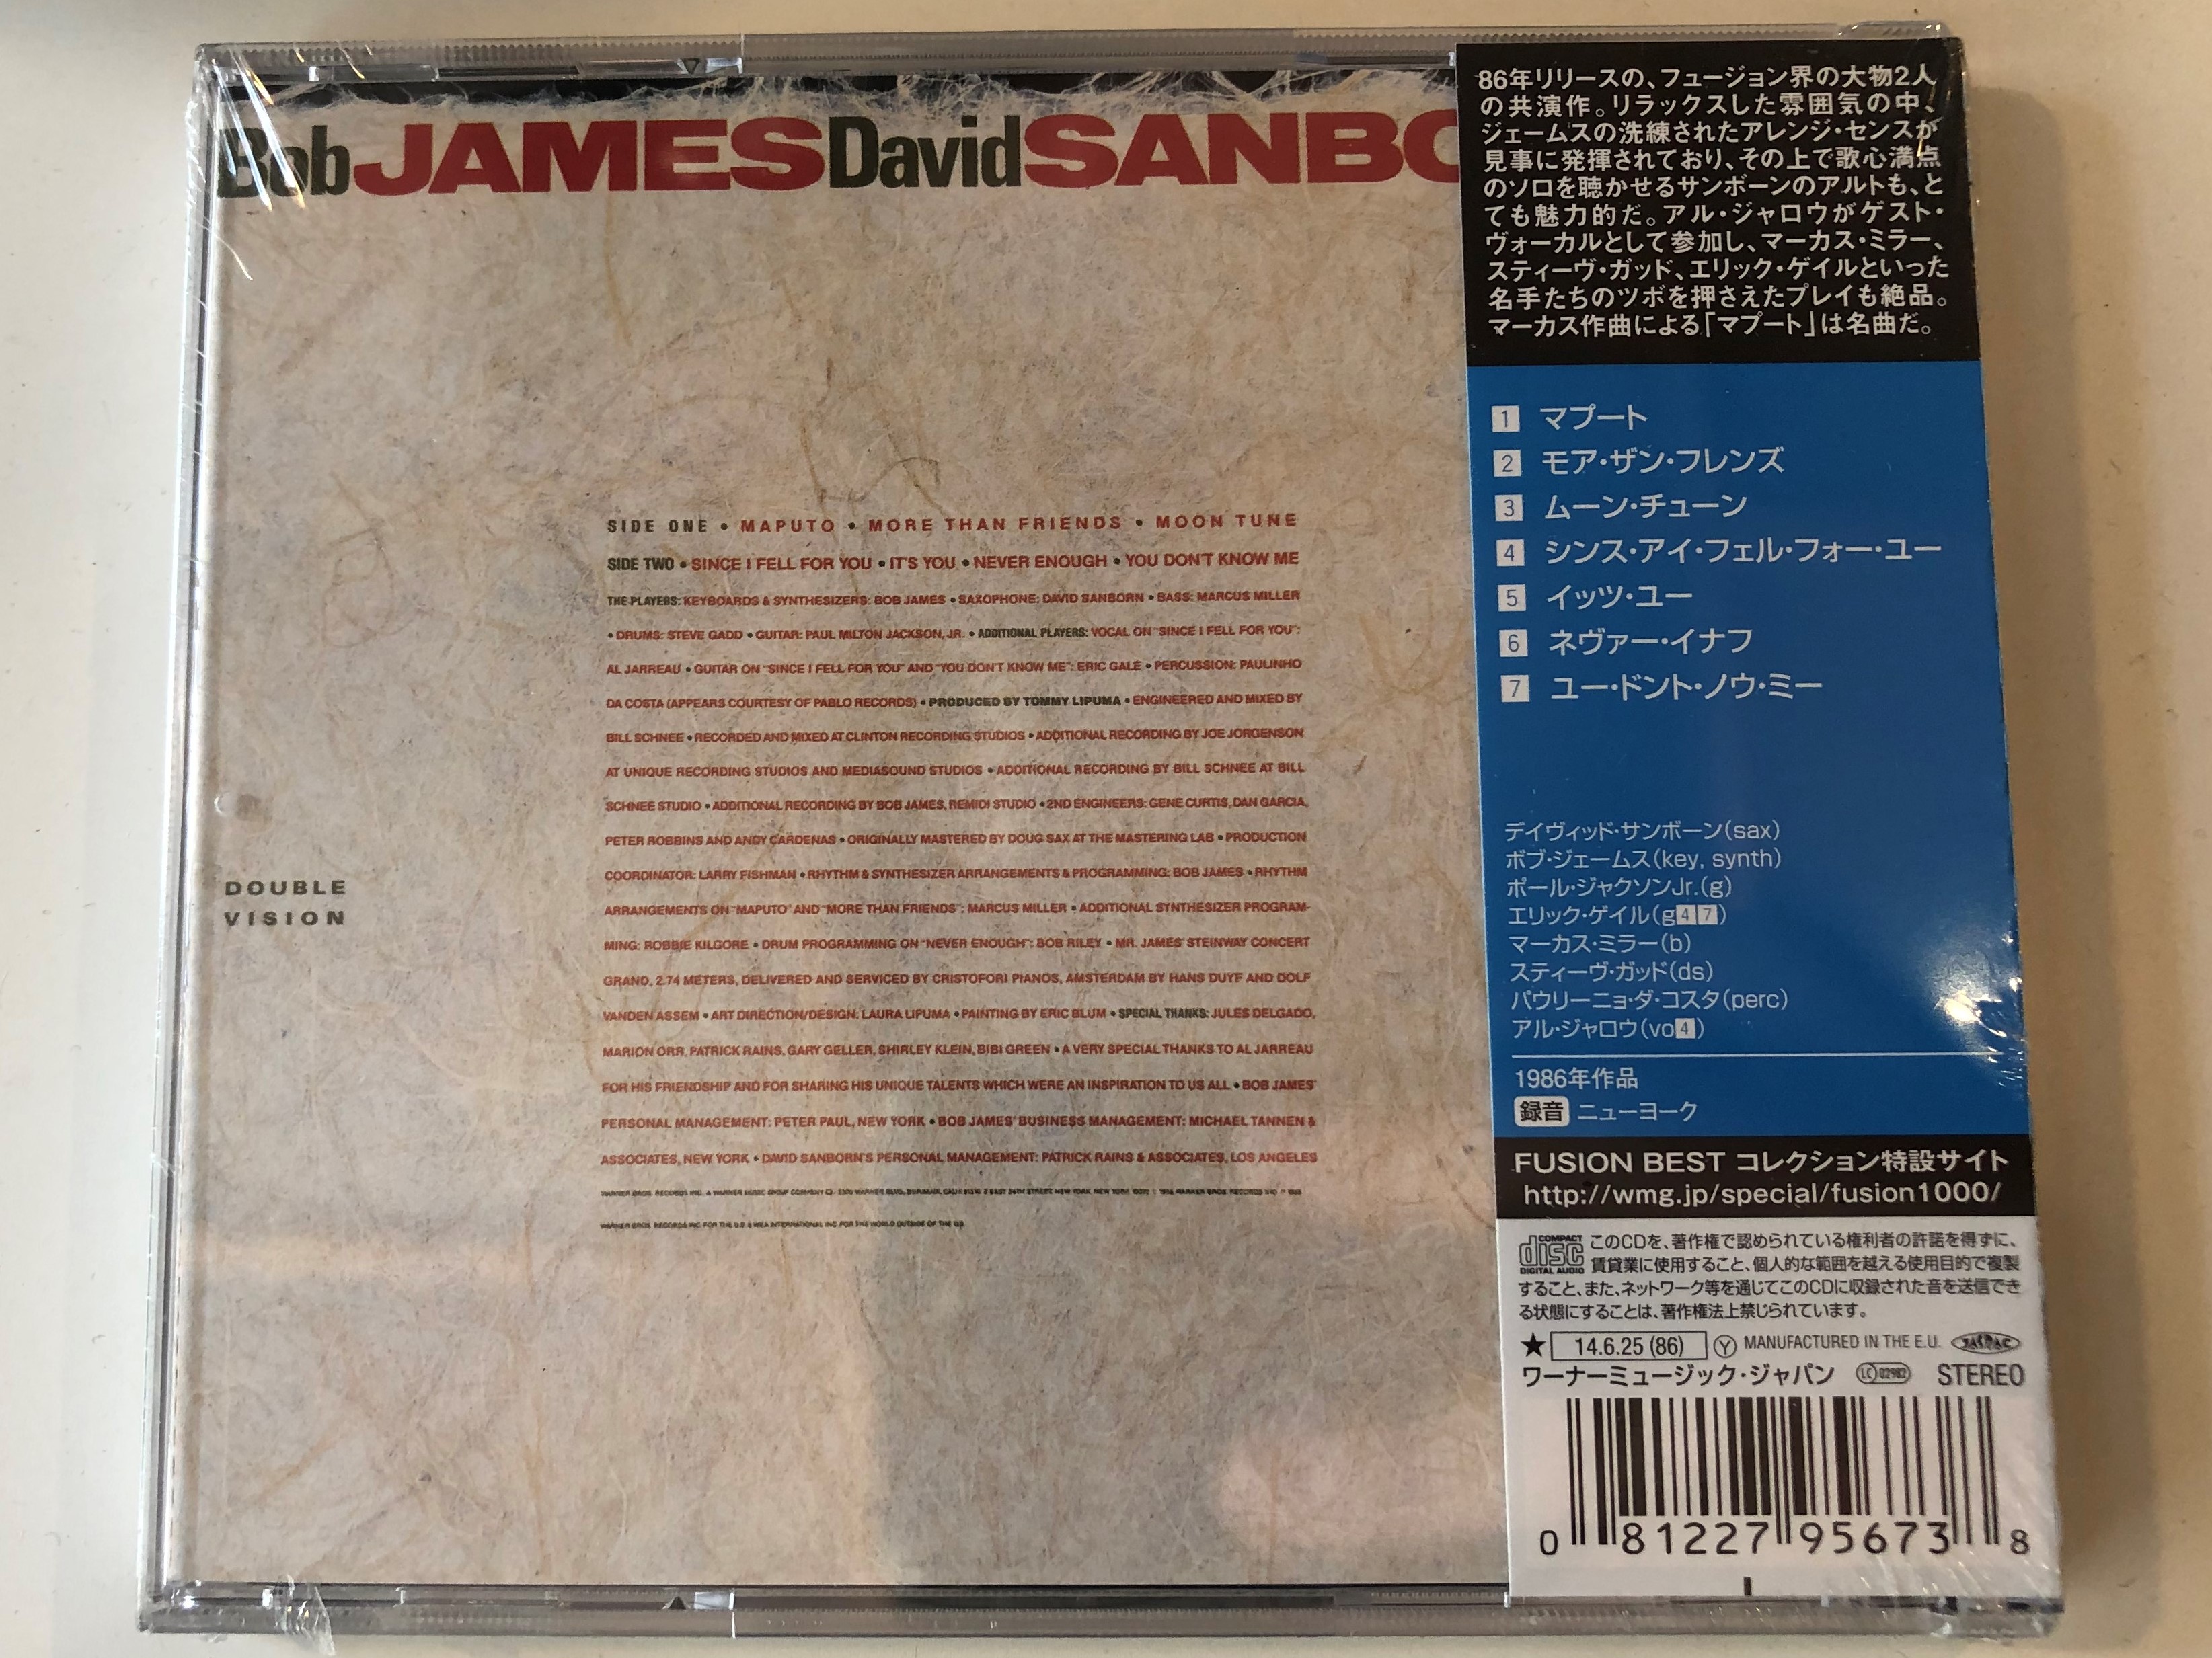 bob-james-david-sanborn-double-vision-fusion-best-collection-1000-warner-bros.-records-audio-cd-1986-stereo-8122-79567-3-2-.jpg